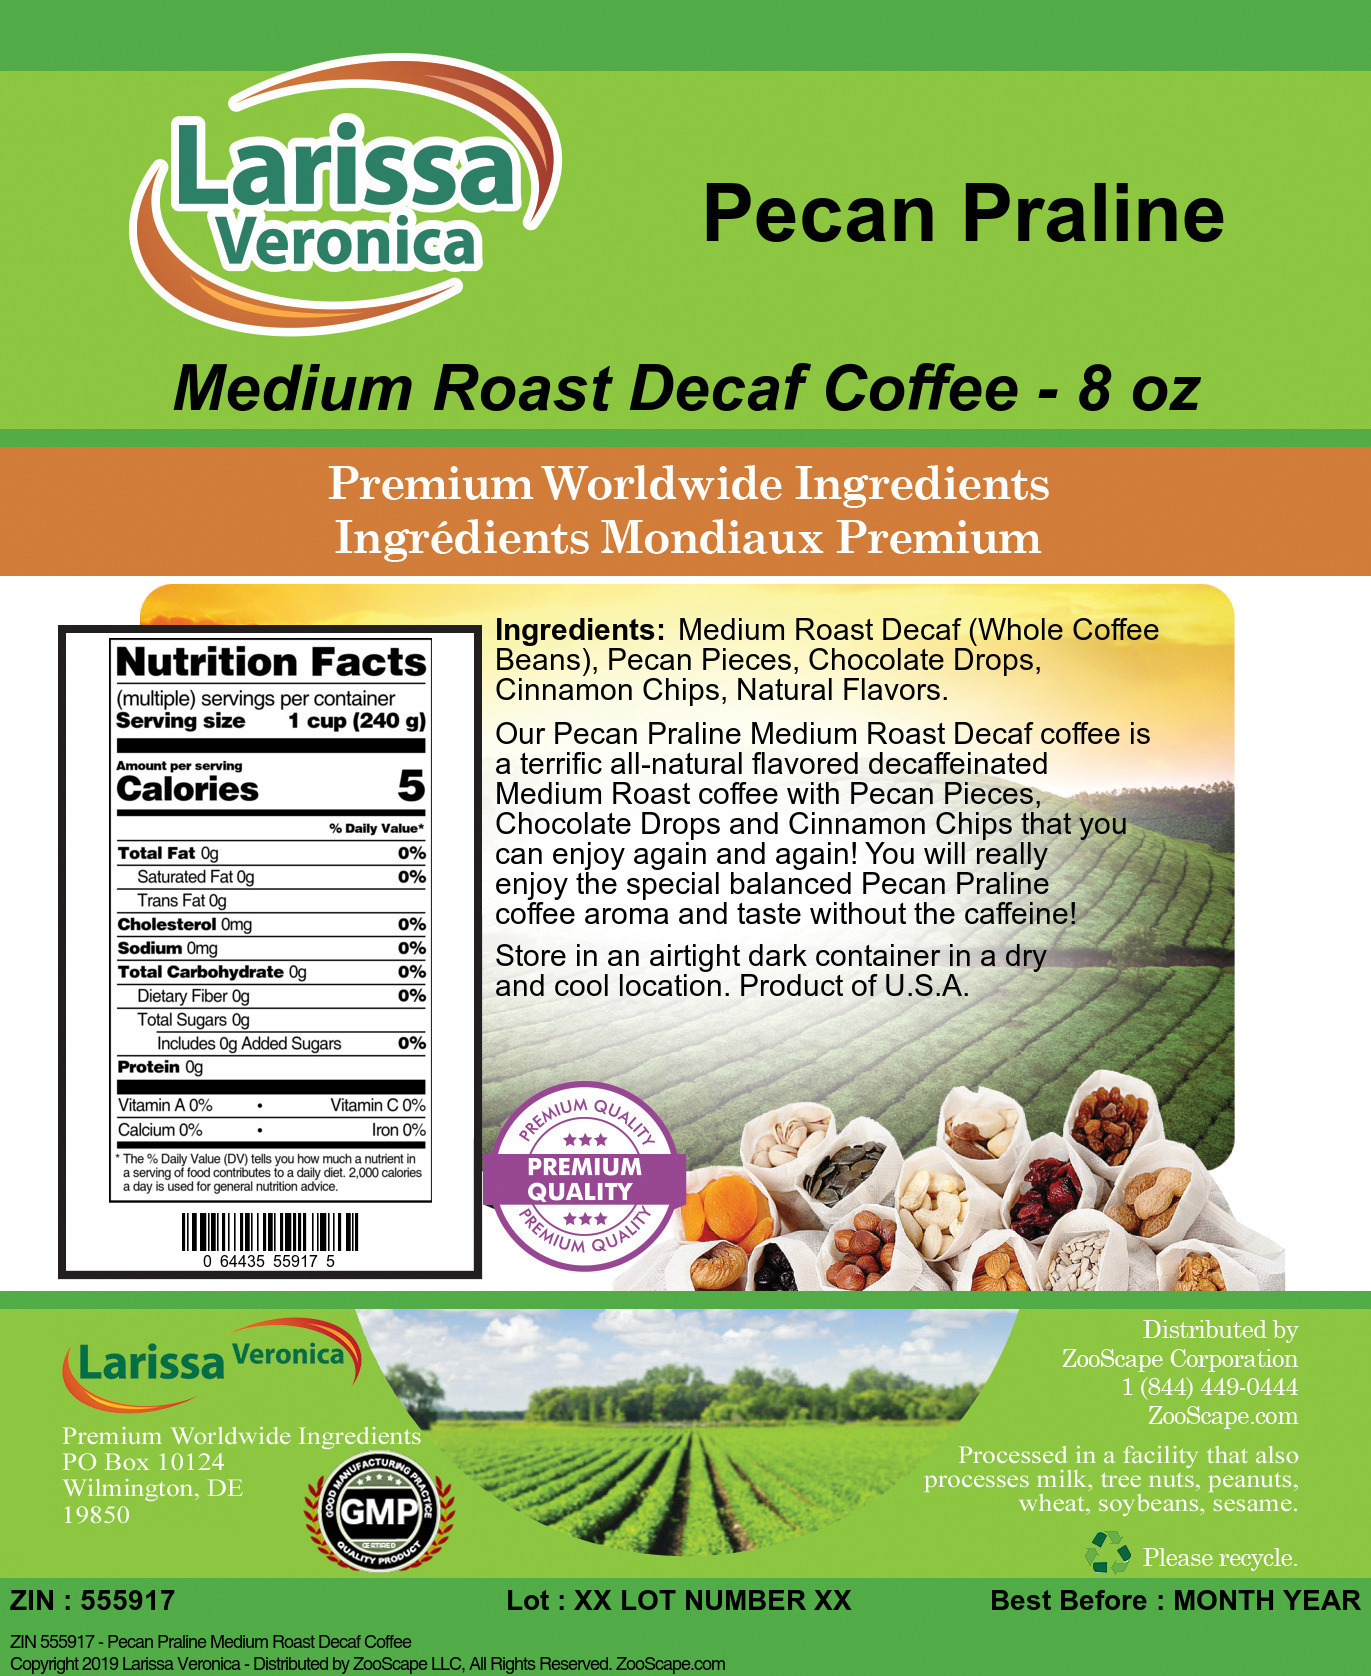 Pecan Praline Medium Roast Decaf Coffee - Label